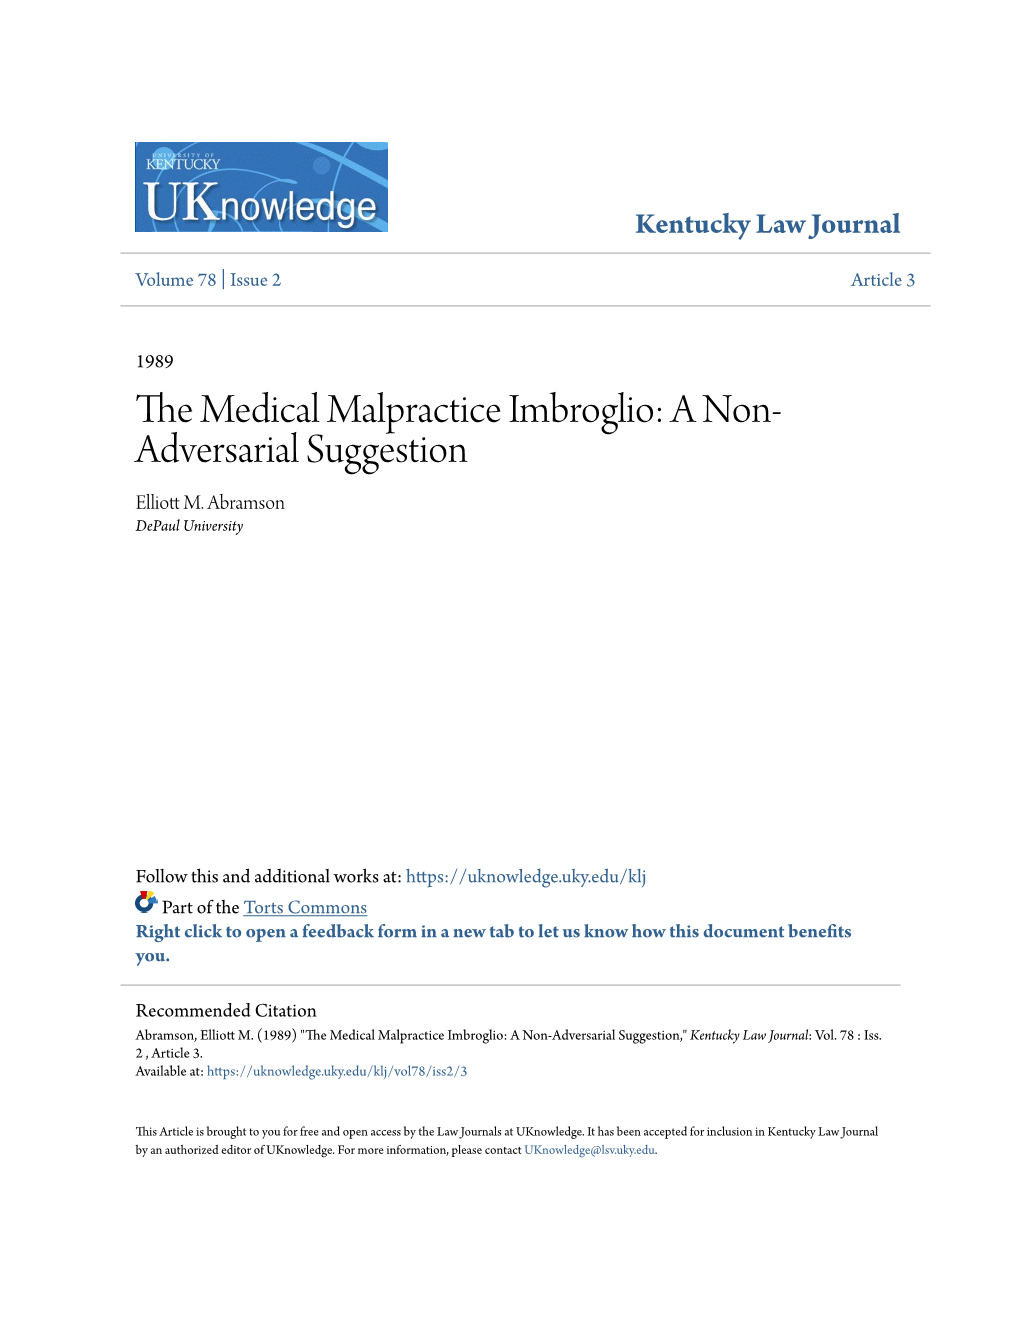 The Medical Malpractice Imbroglio: a Non-Adversarial Suggestion